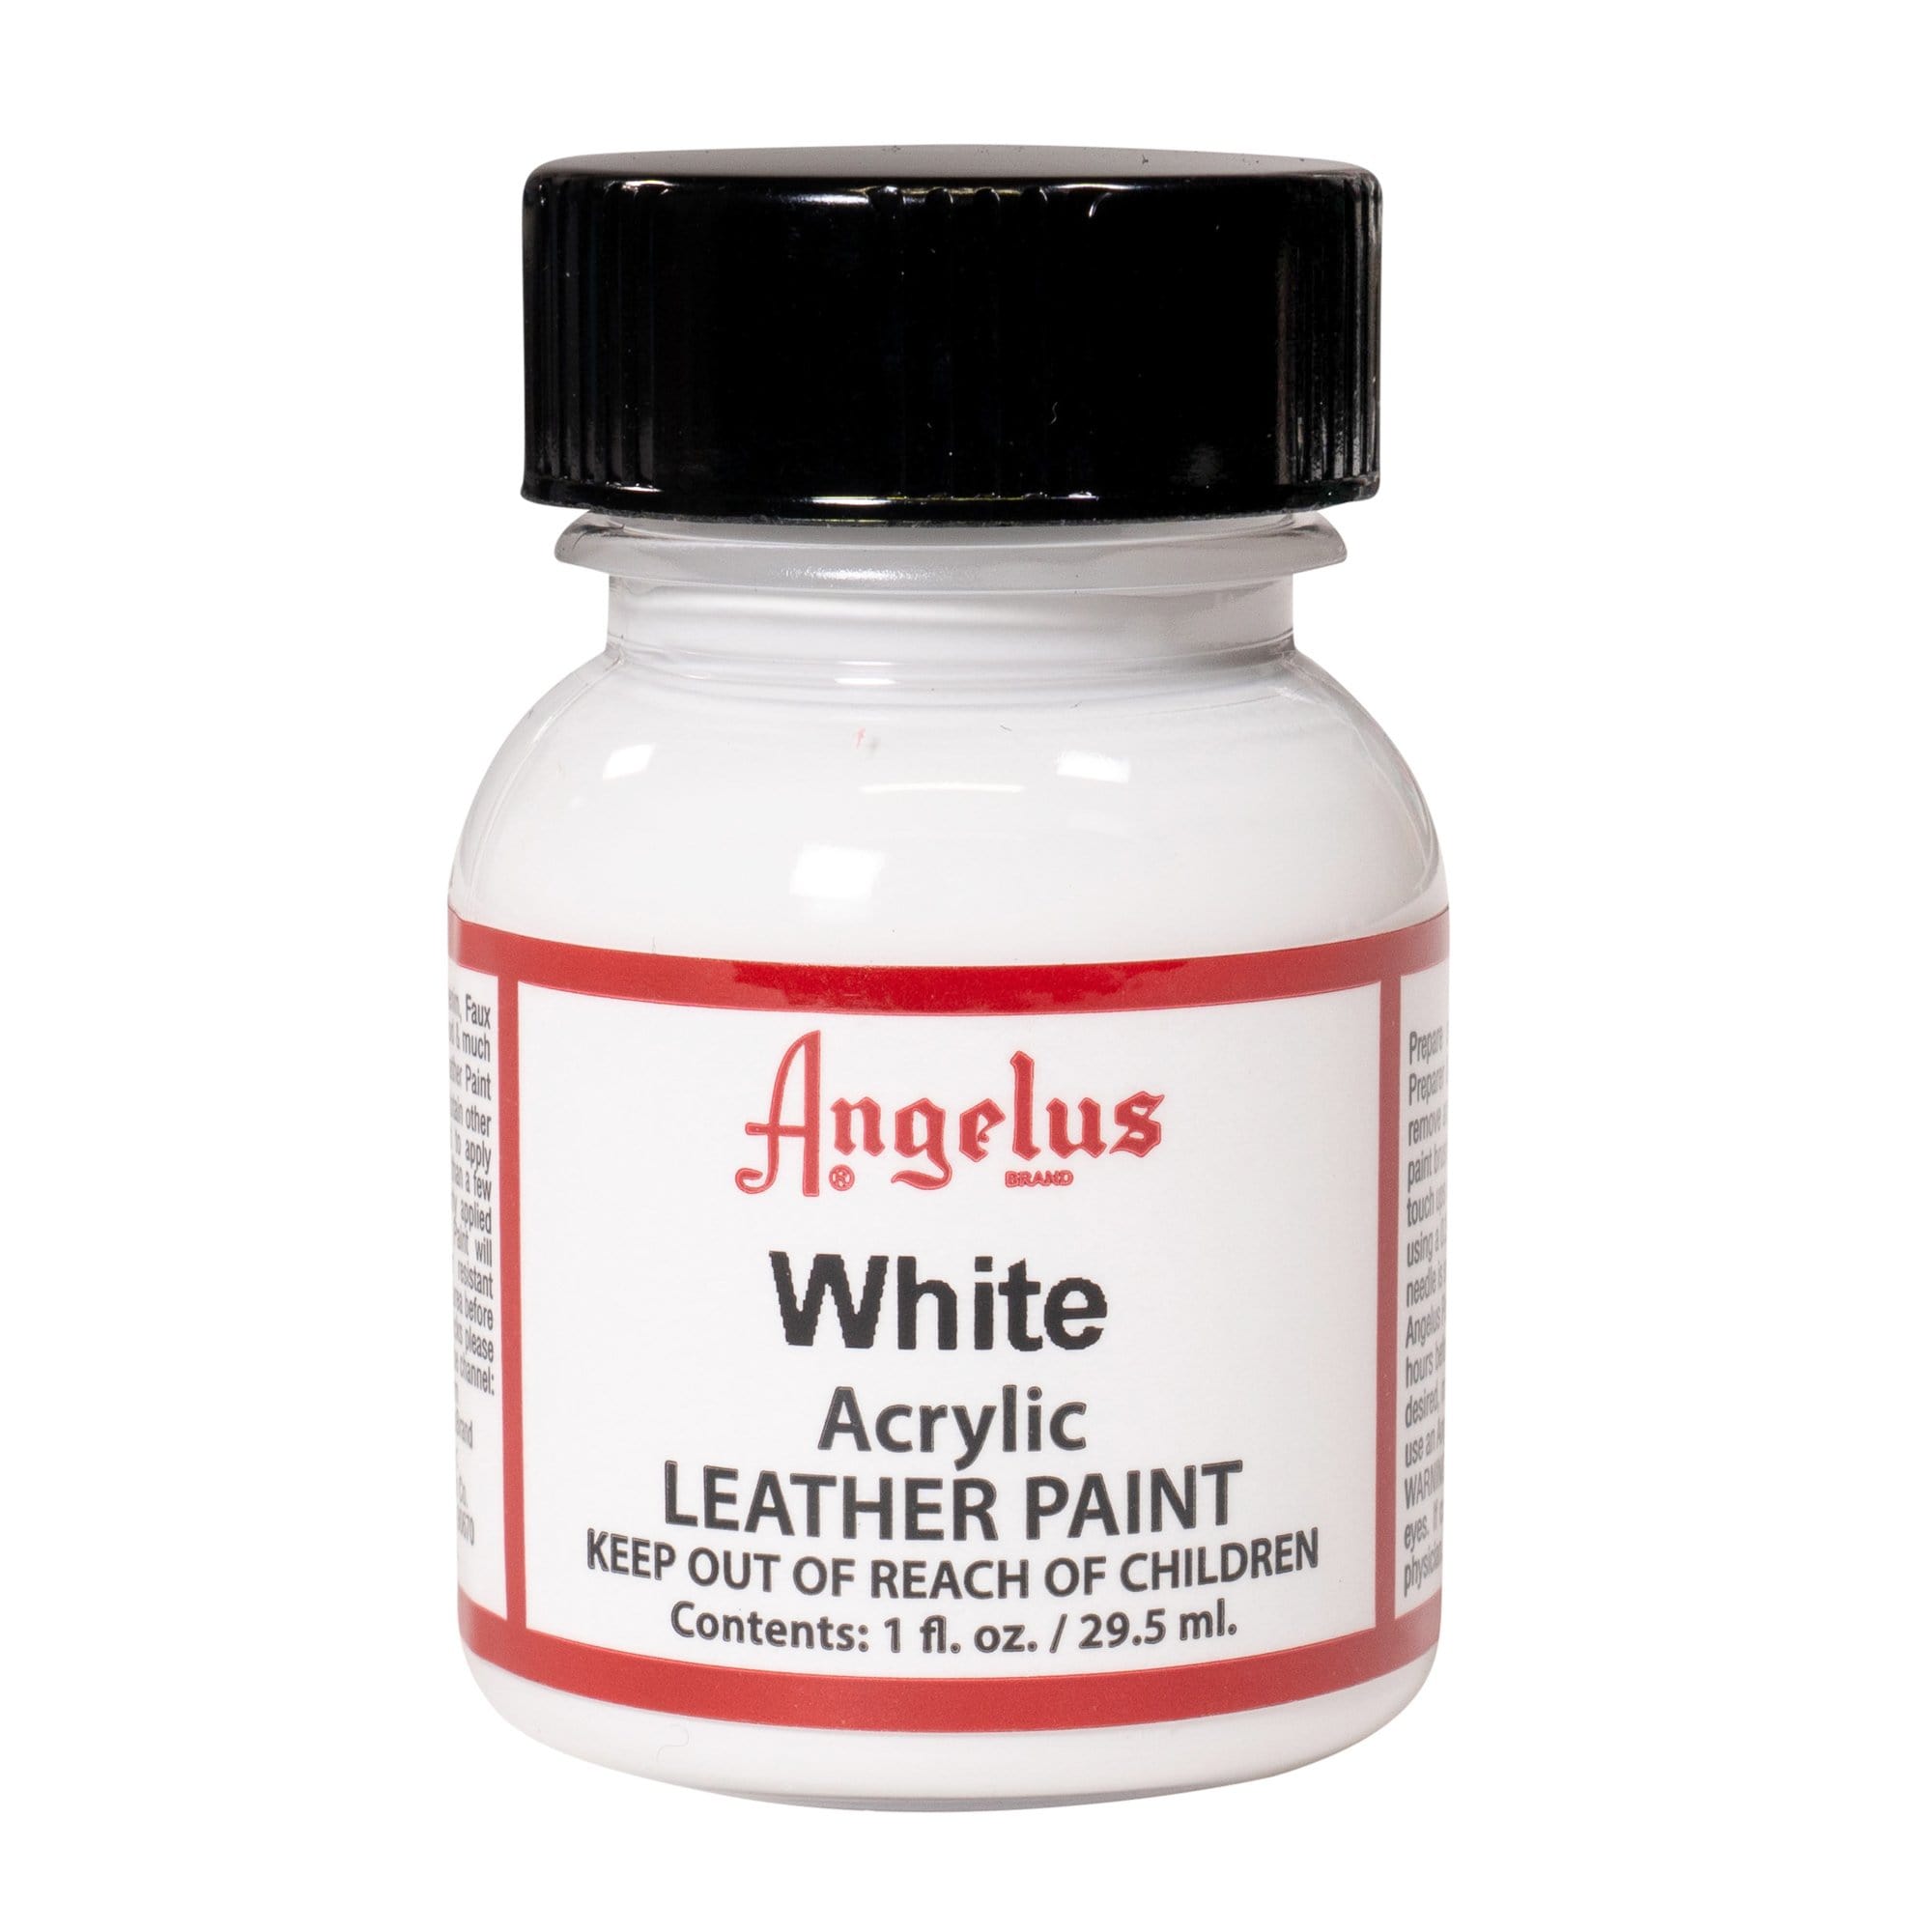 BUY Angelus Leather Paint 4 oz White